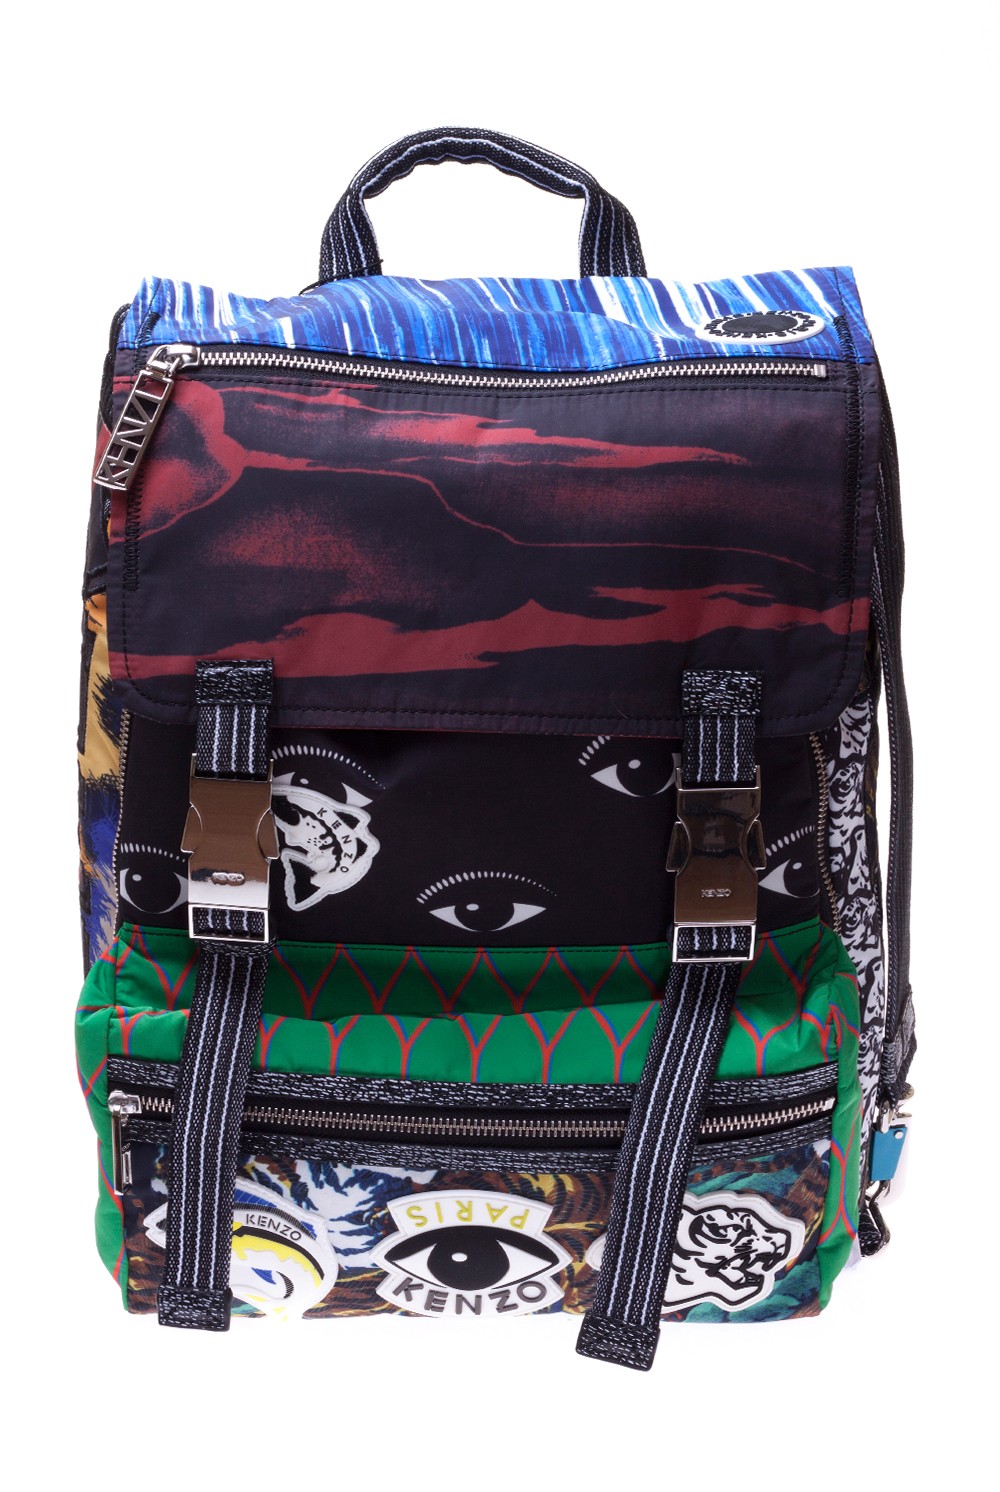 kenzo flying tiger backpack